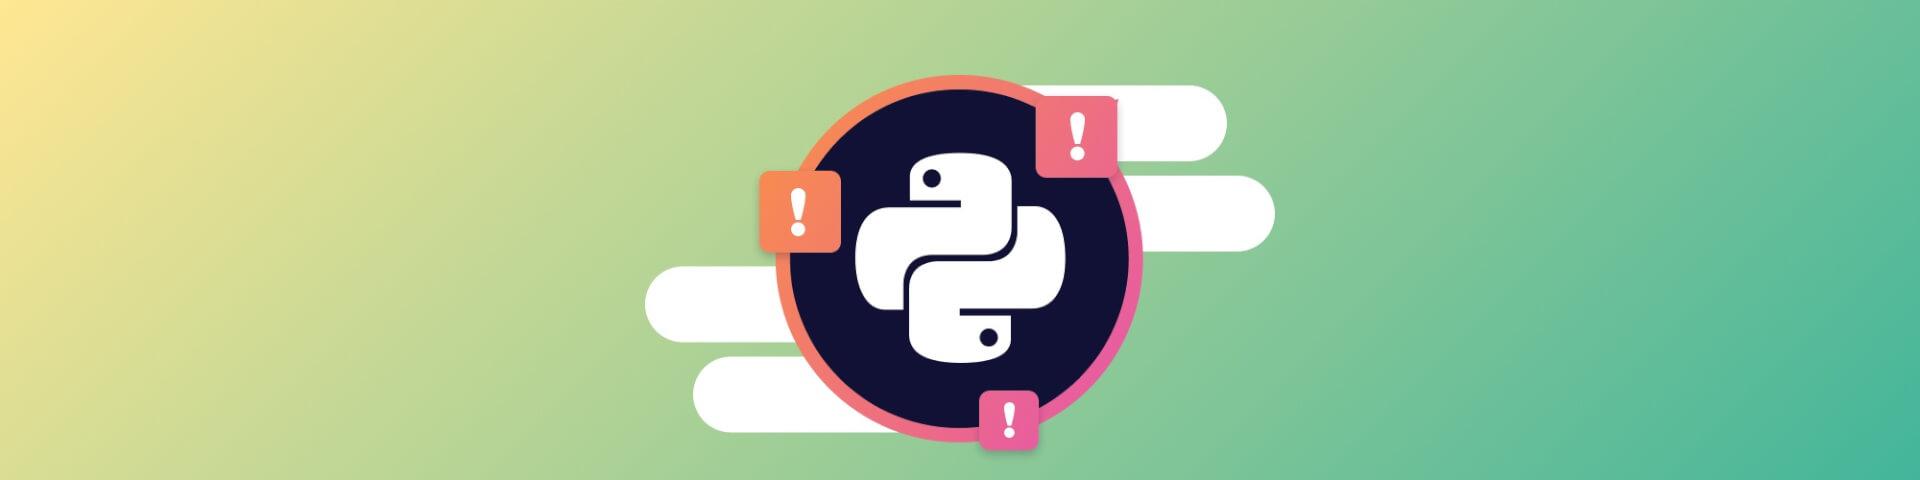 wordpress-sync/hero-assert-in-python